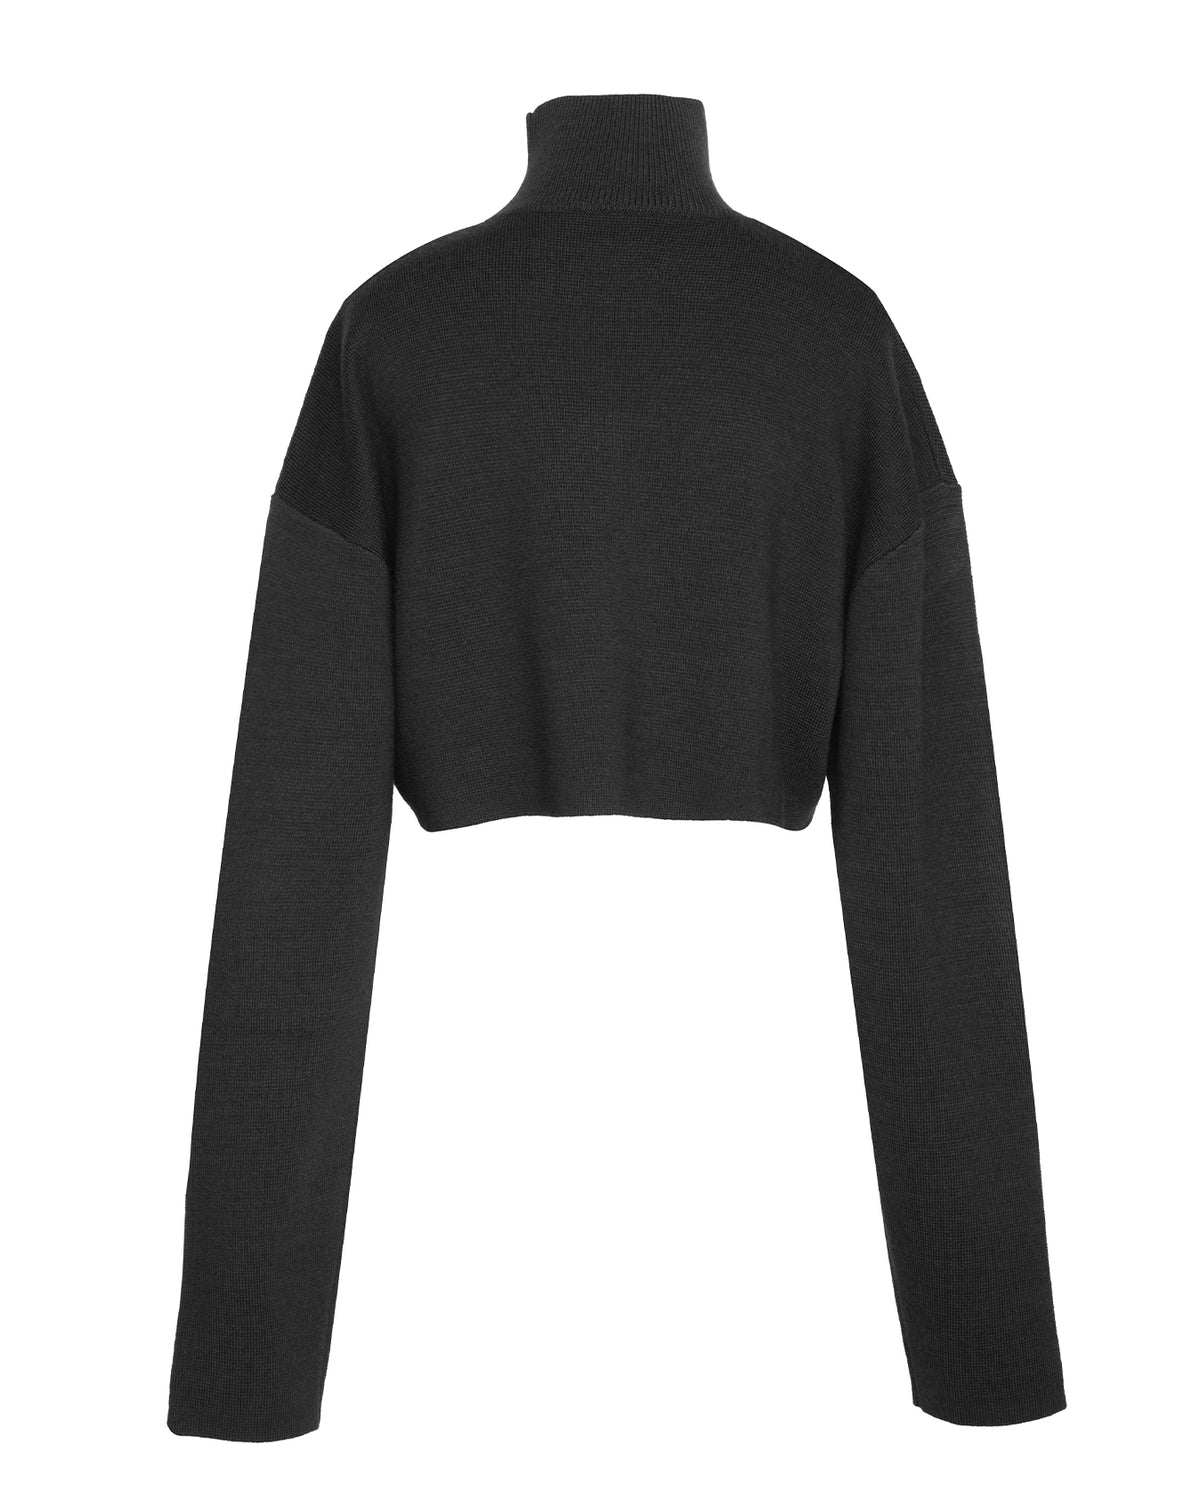 Asymmetrical Turtleneck Sweater